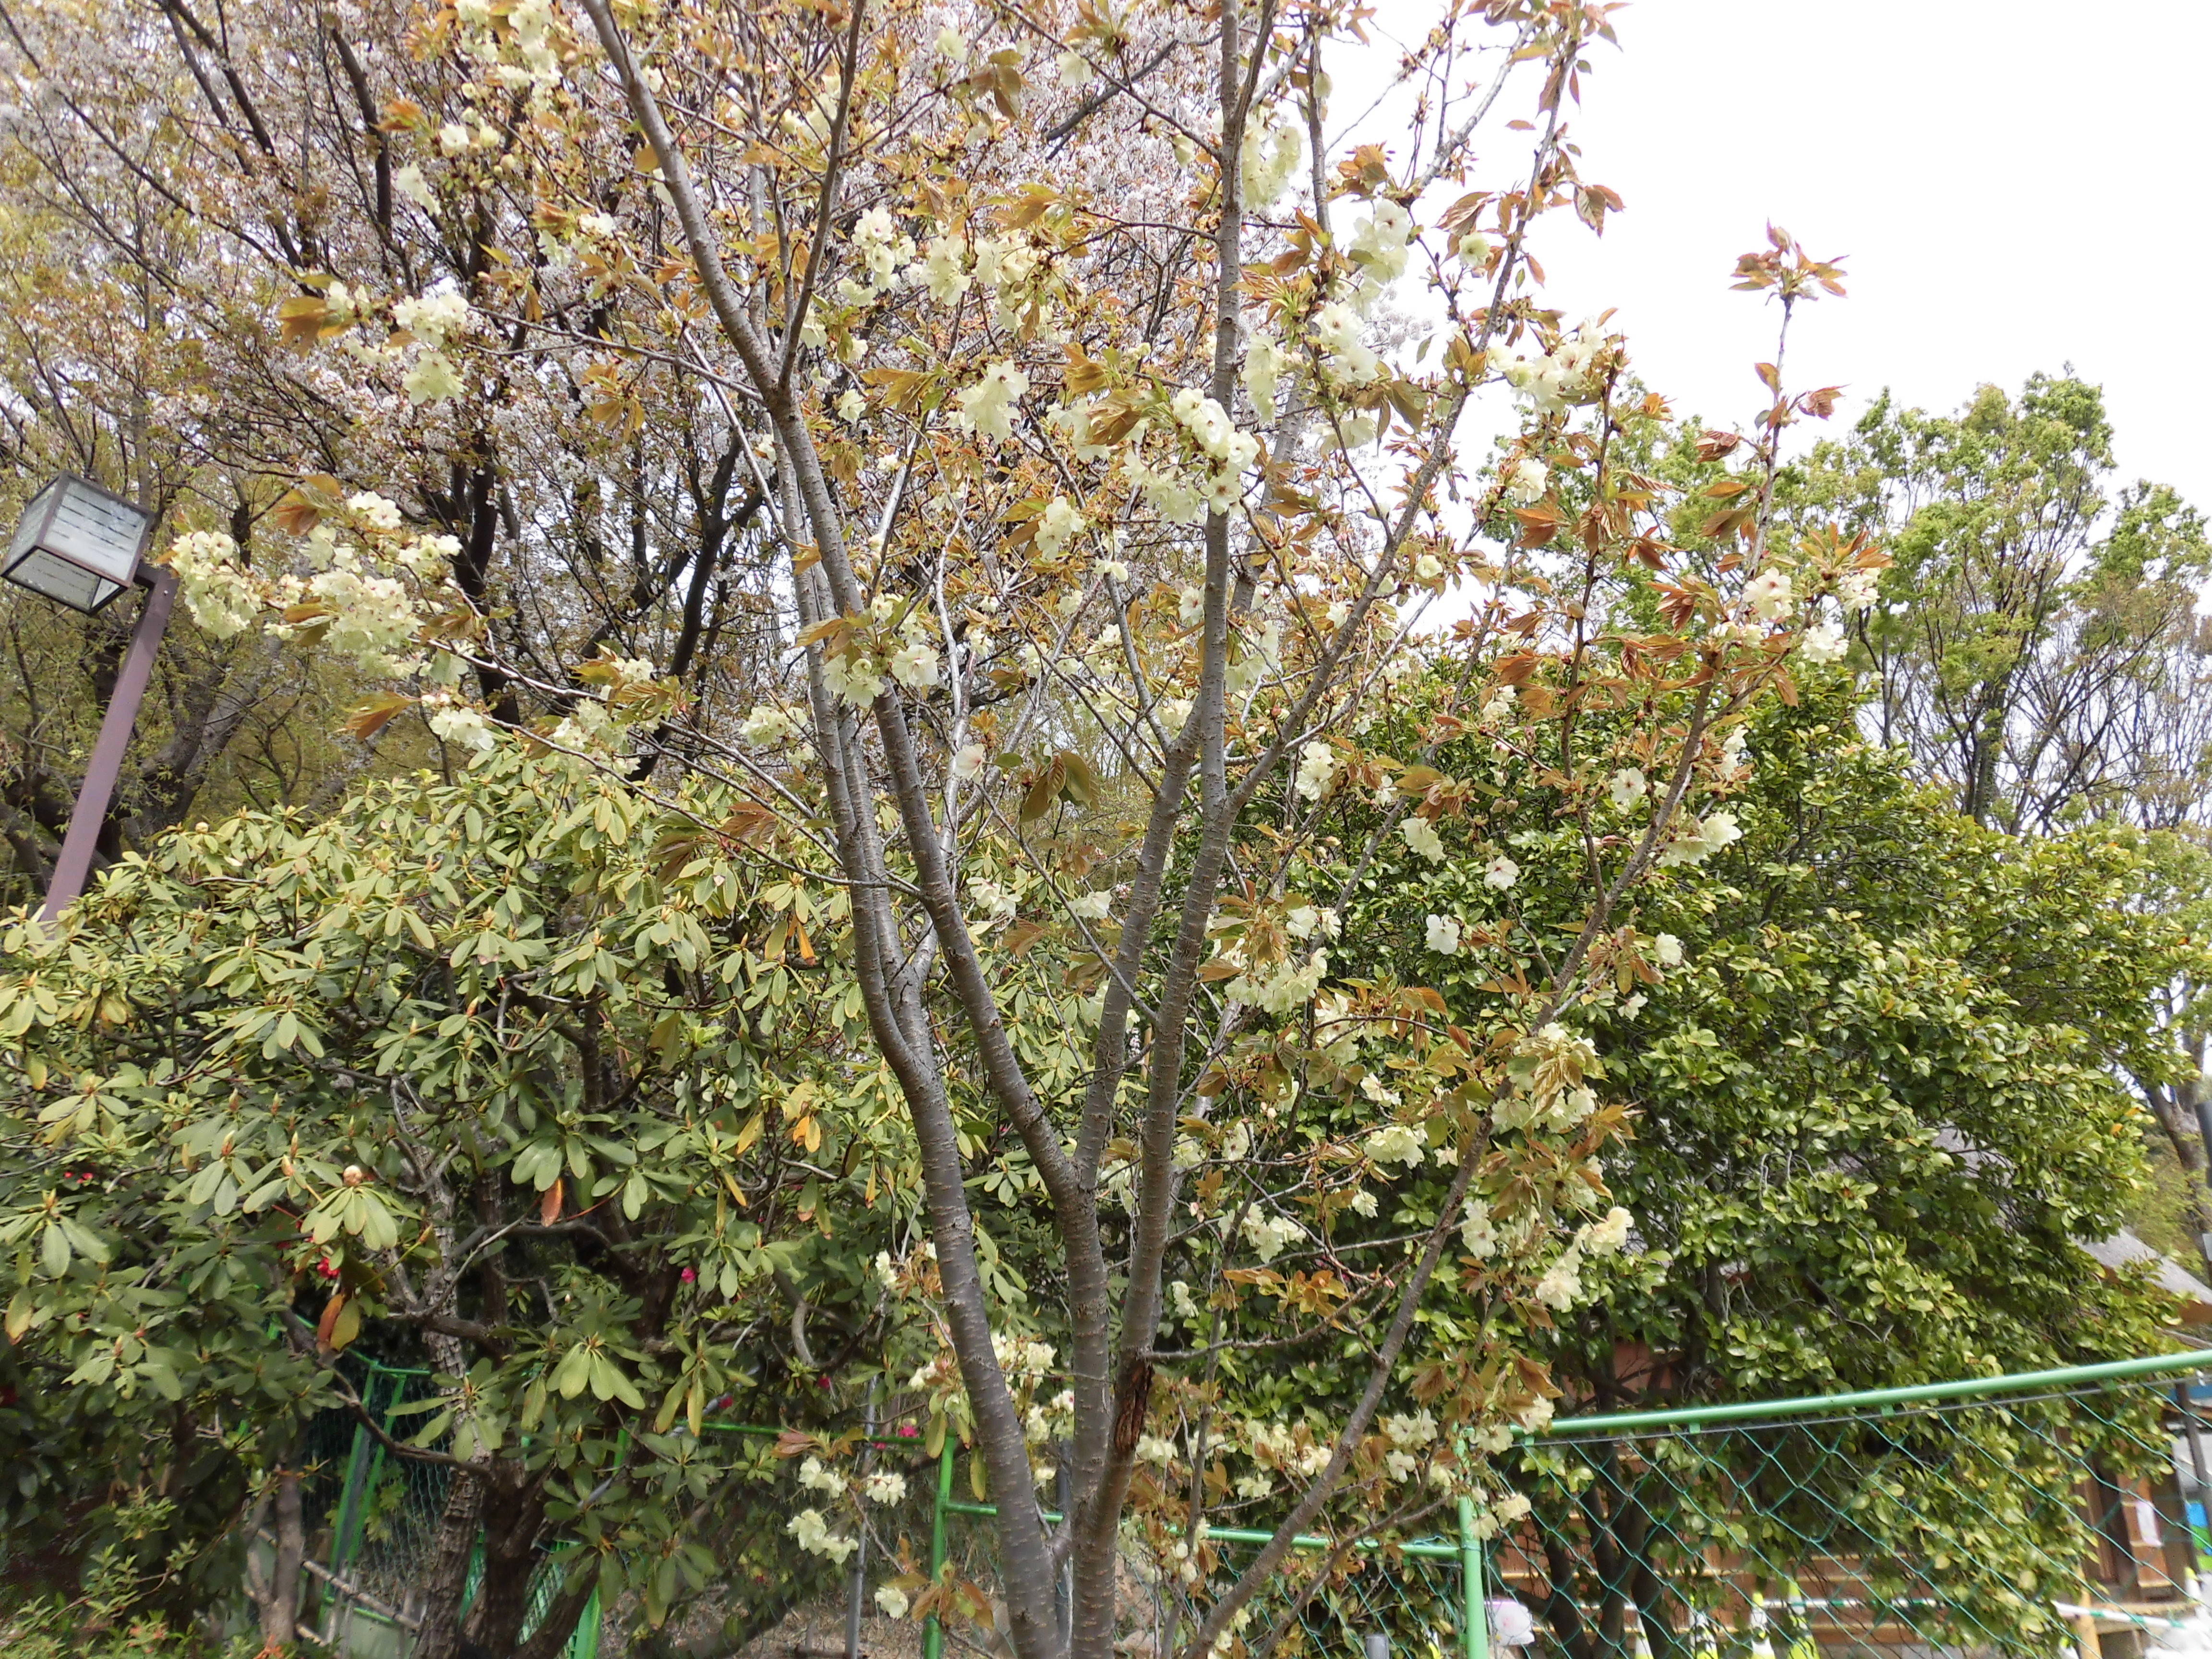 馬場花木園 珍しい黄緑色の桜が開花 桜開花 馬場花木園公式サイト 公益財団法人 横浜市緑の協会